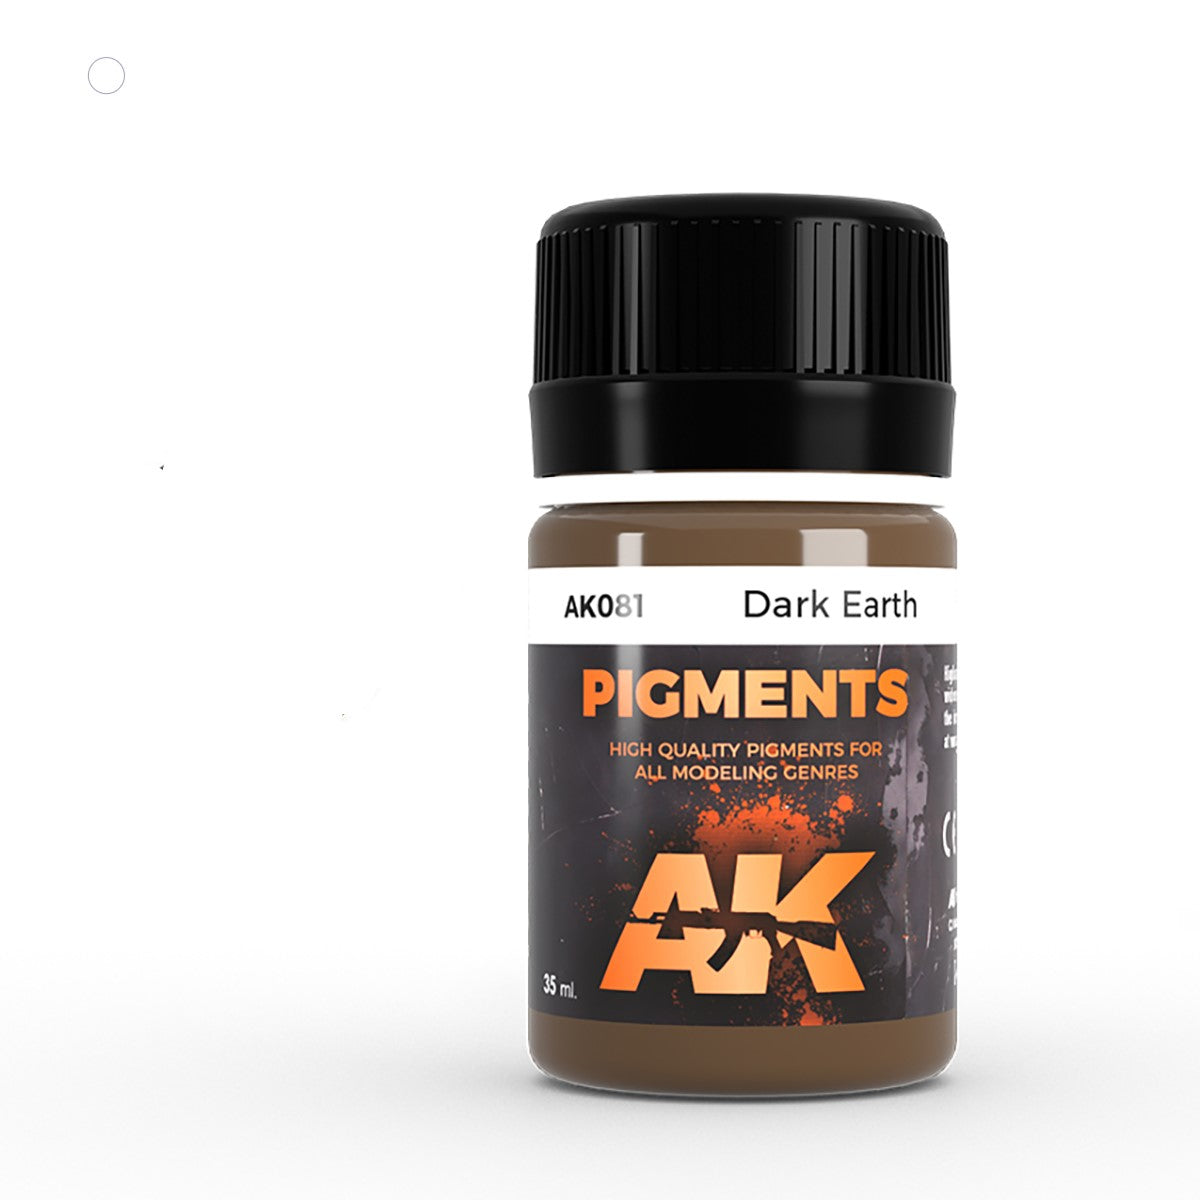 AK Weathering Pigment